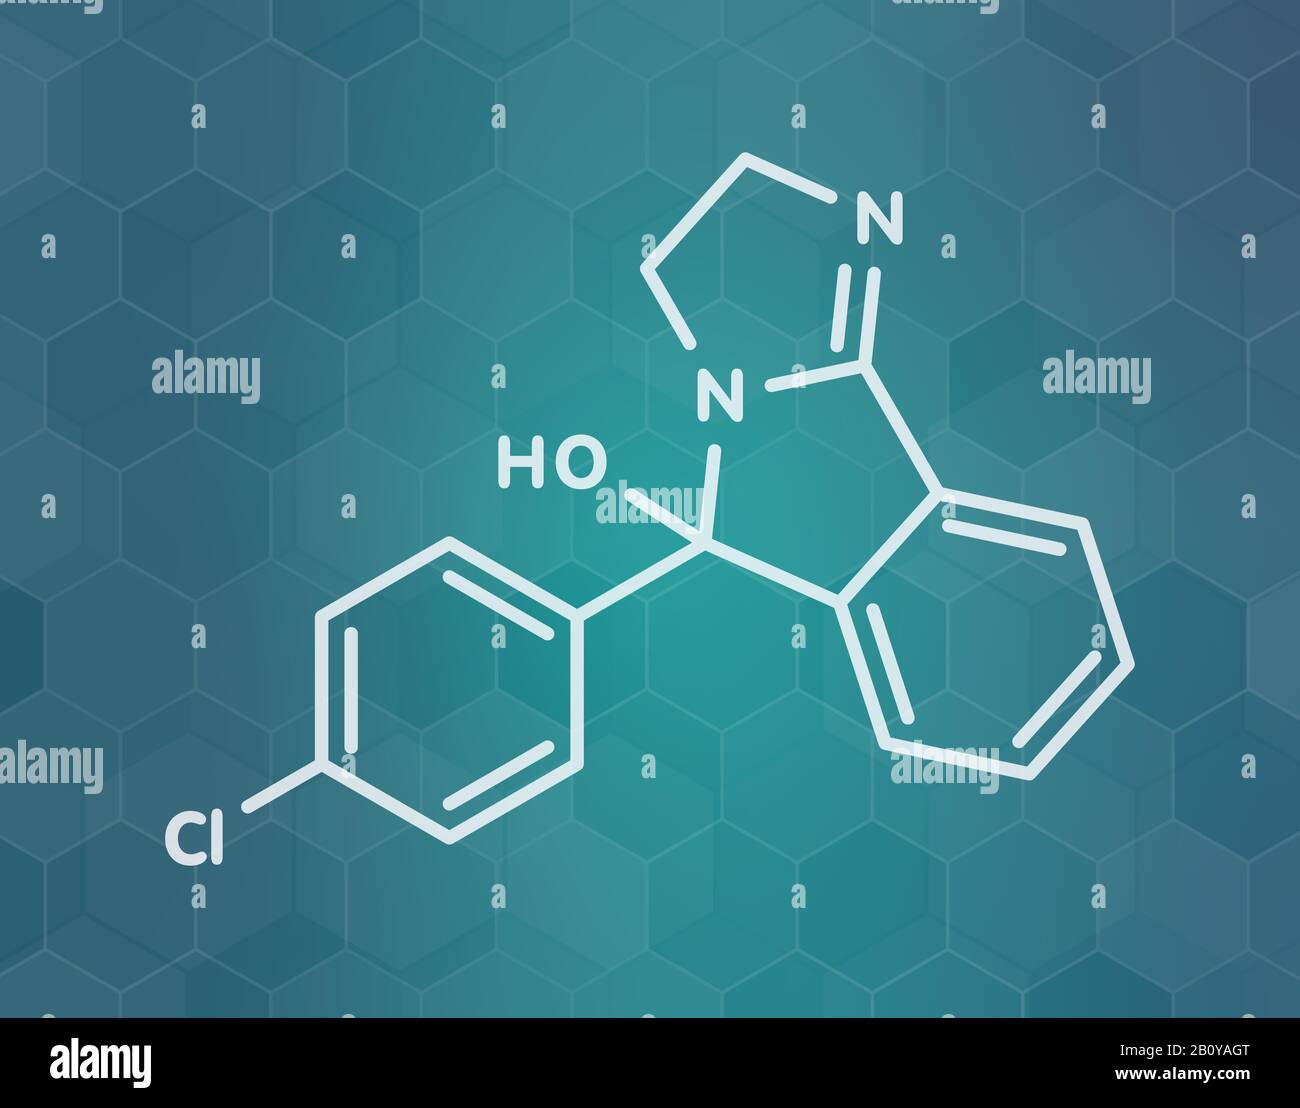 Mazindol Appetit Suppressant Drug Molecule, Illustration Stockfoto